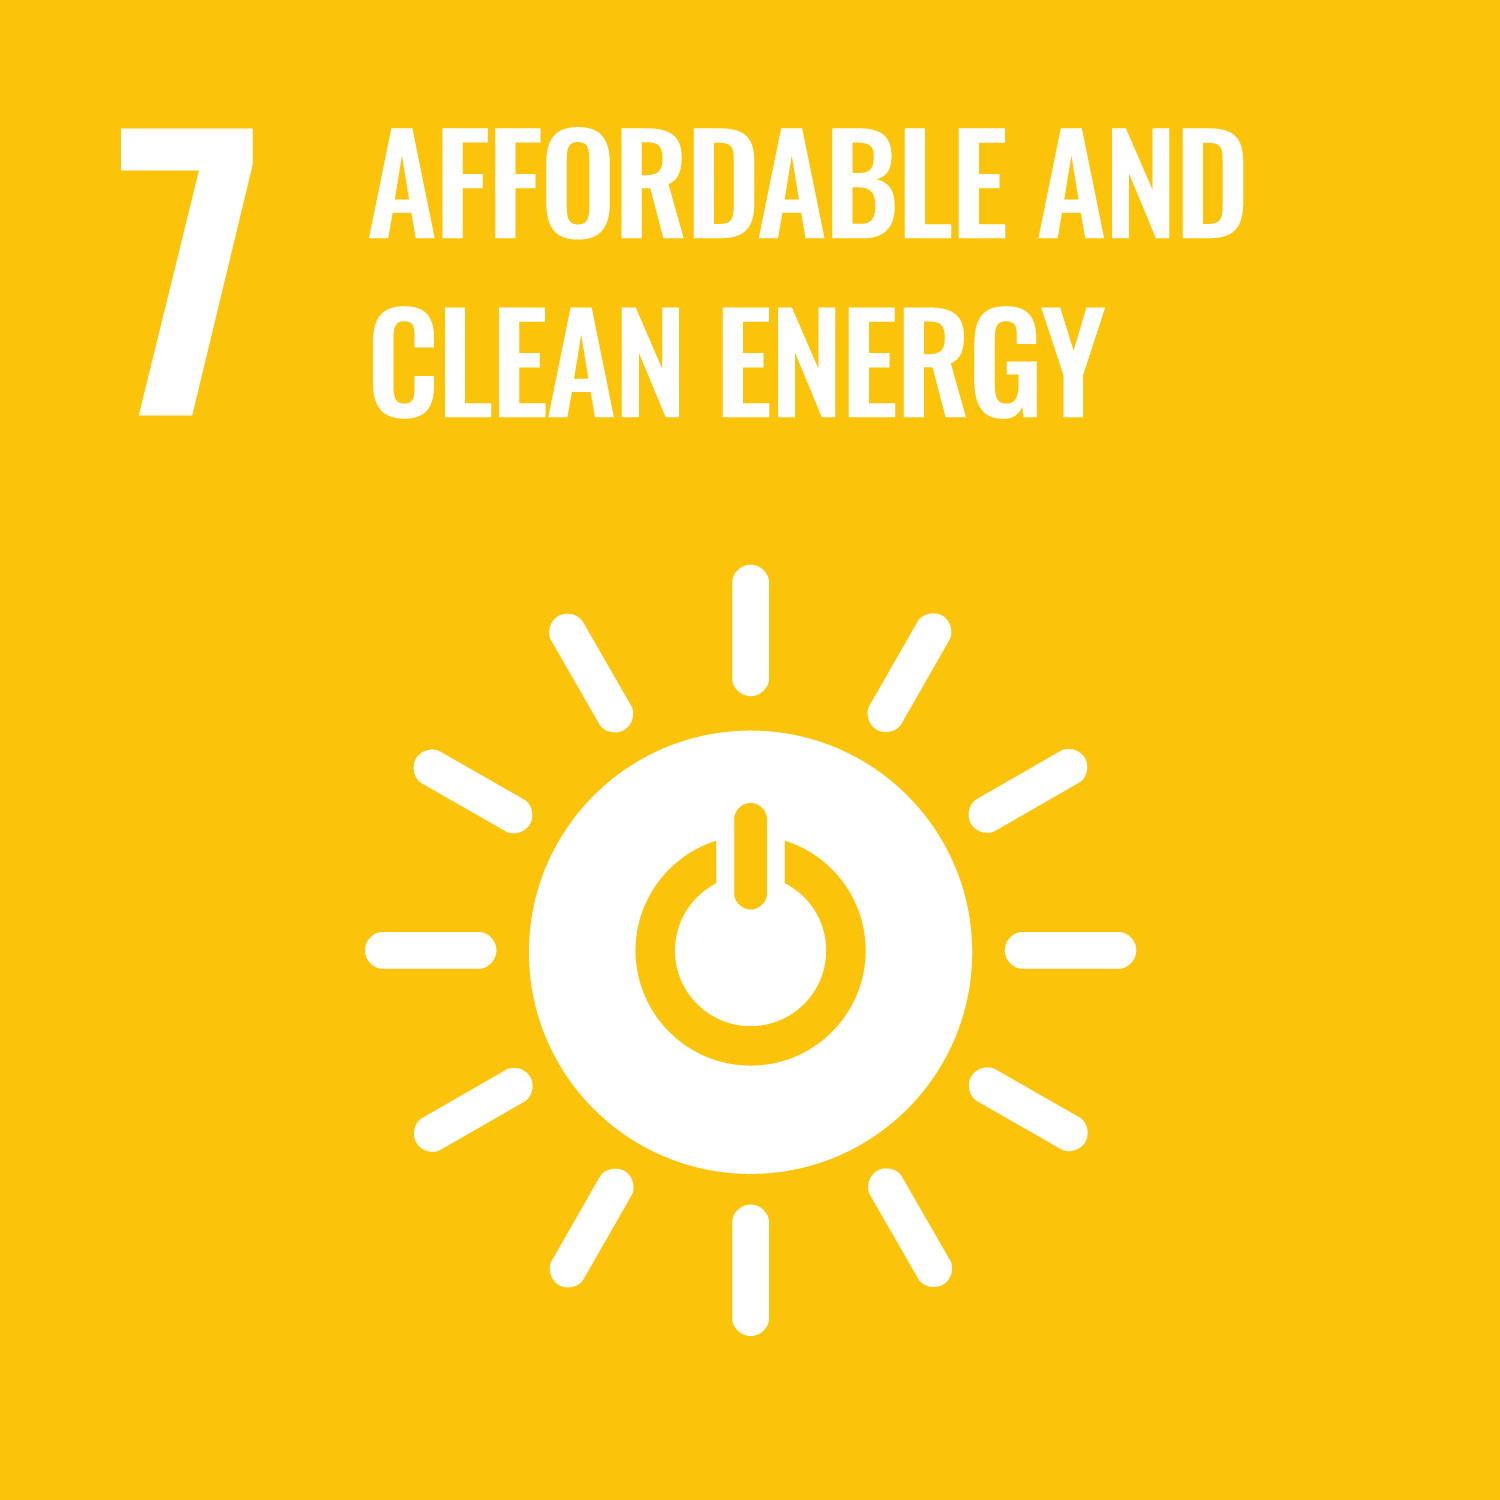 United National Sustainable Development Goals logo for 7